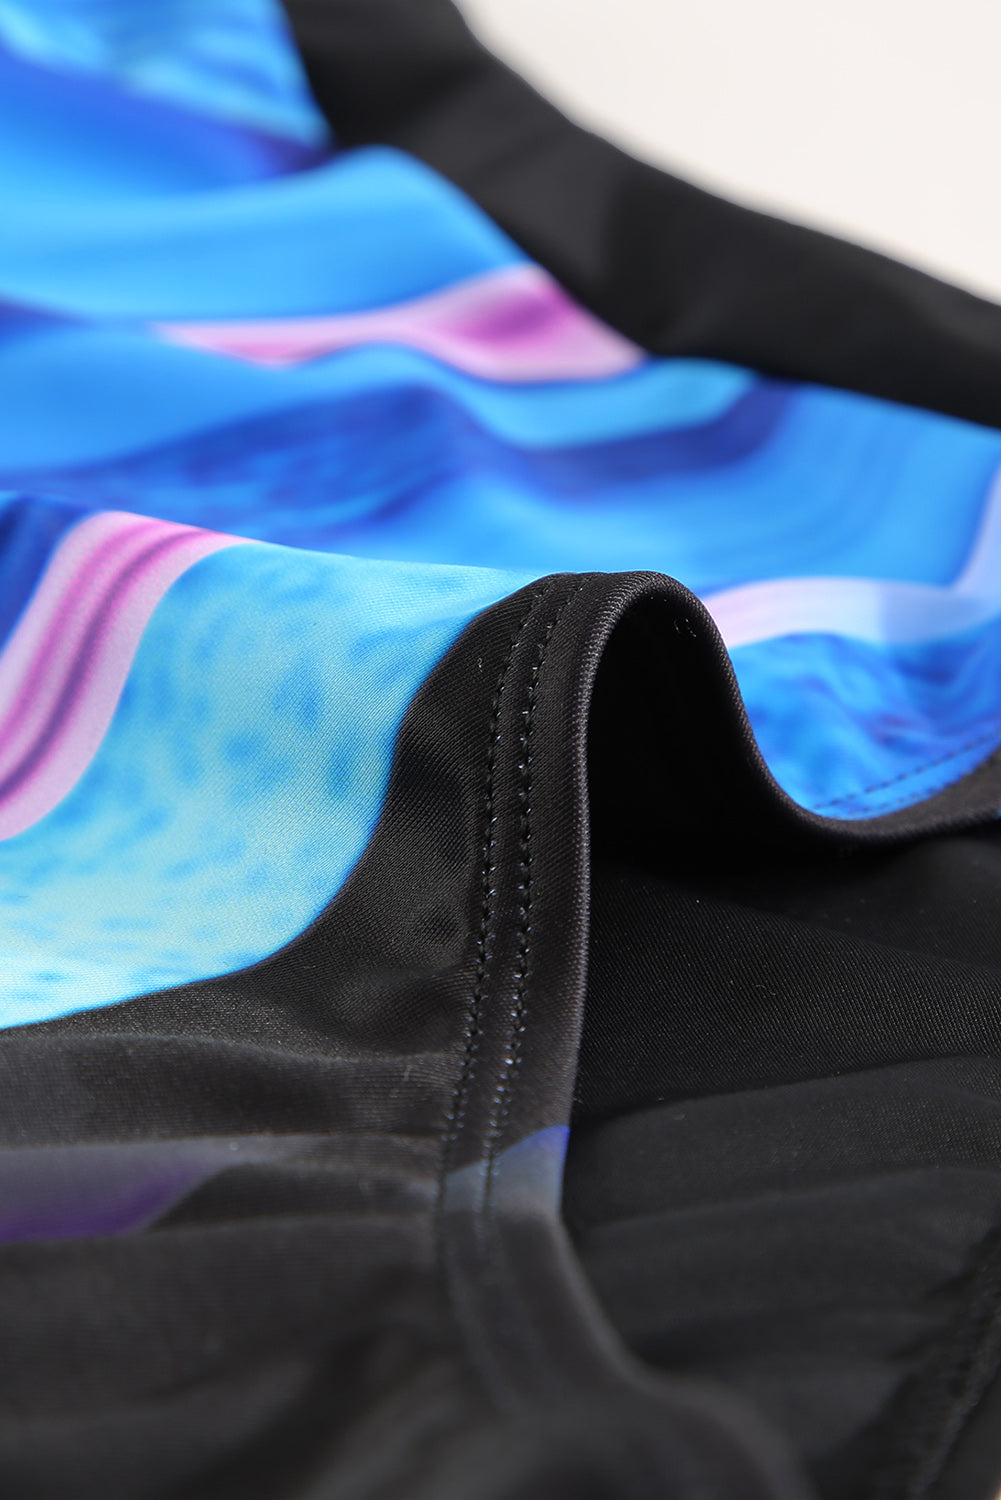 LC442787-5-S, LC442787-5-M, LC442787-5-L, LC442787-5-XL, LC442787-5-2XL, Blue Women's One Piece Swimsuit Striped Pattern Print Sleeveless Bathing Suit